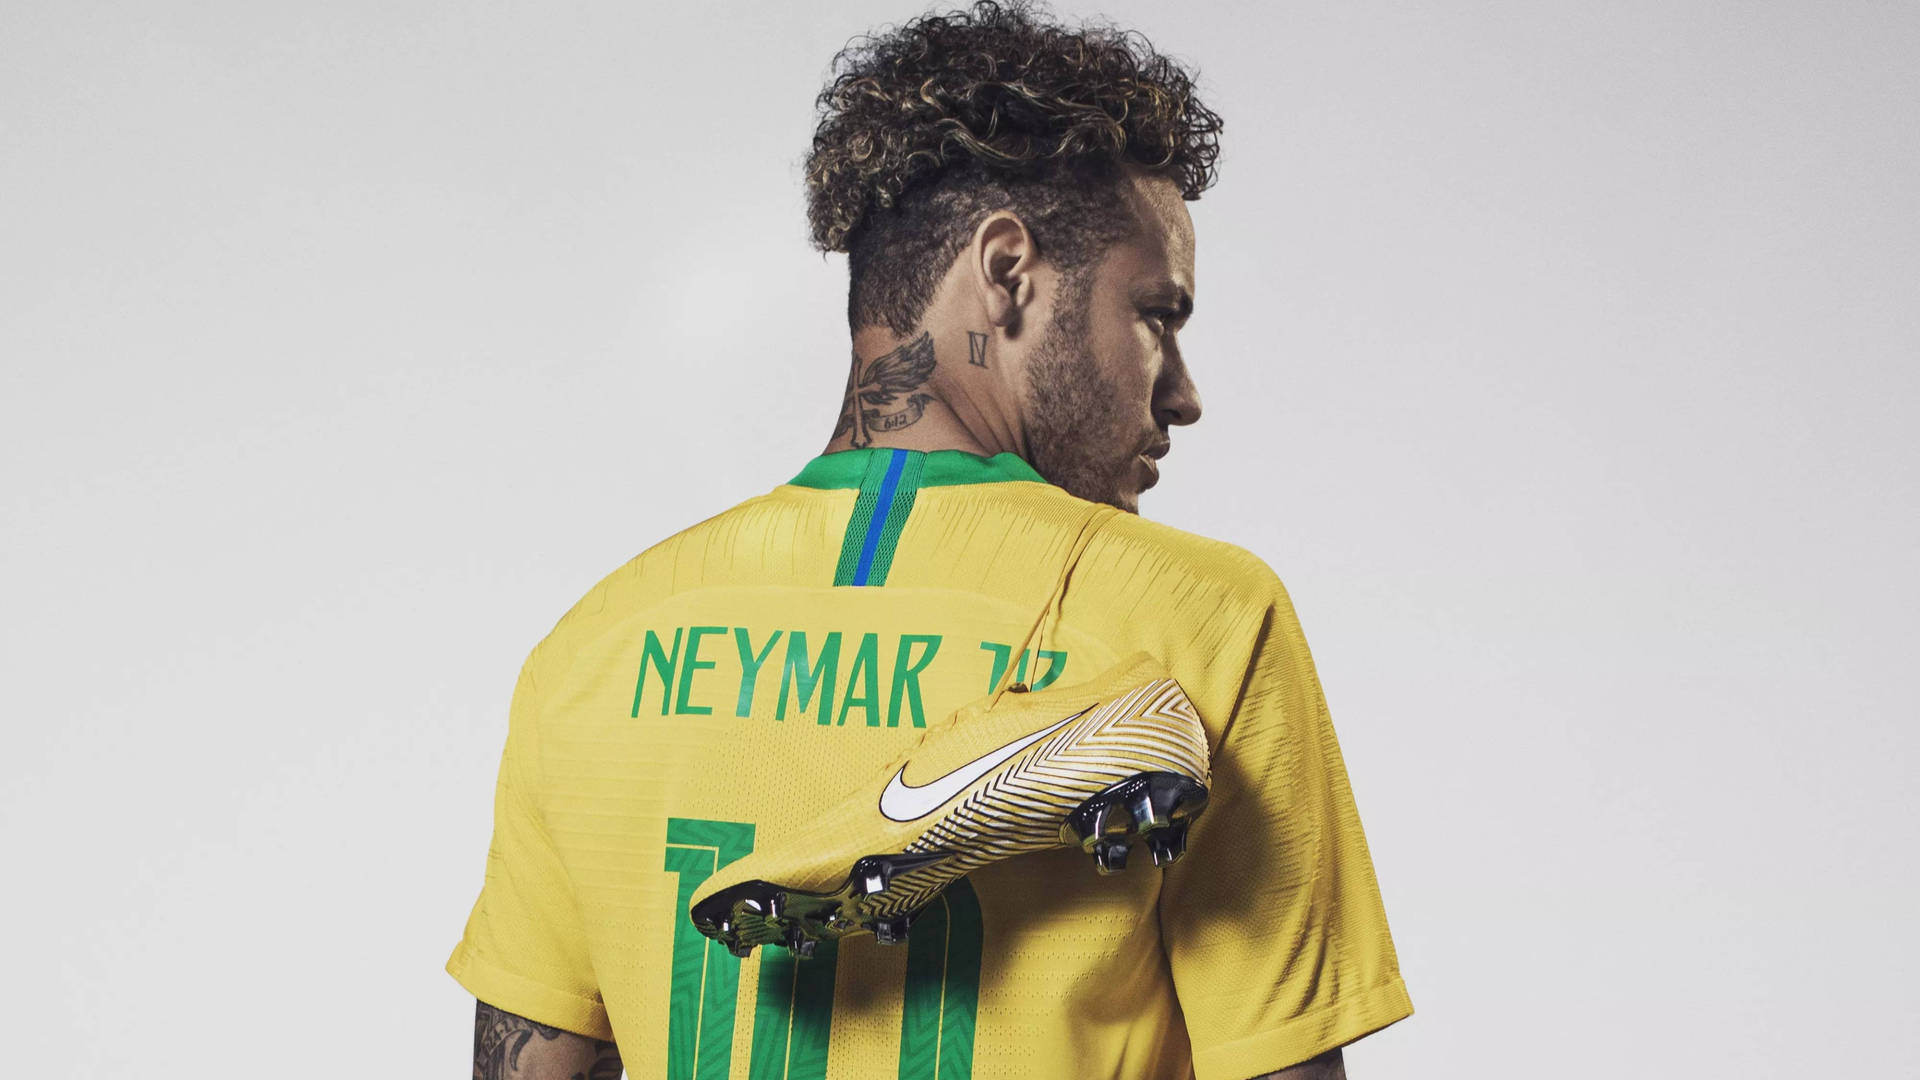 Gelbernike-schuh Neymar 4k Wallpaper